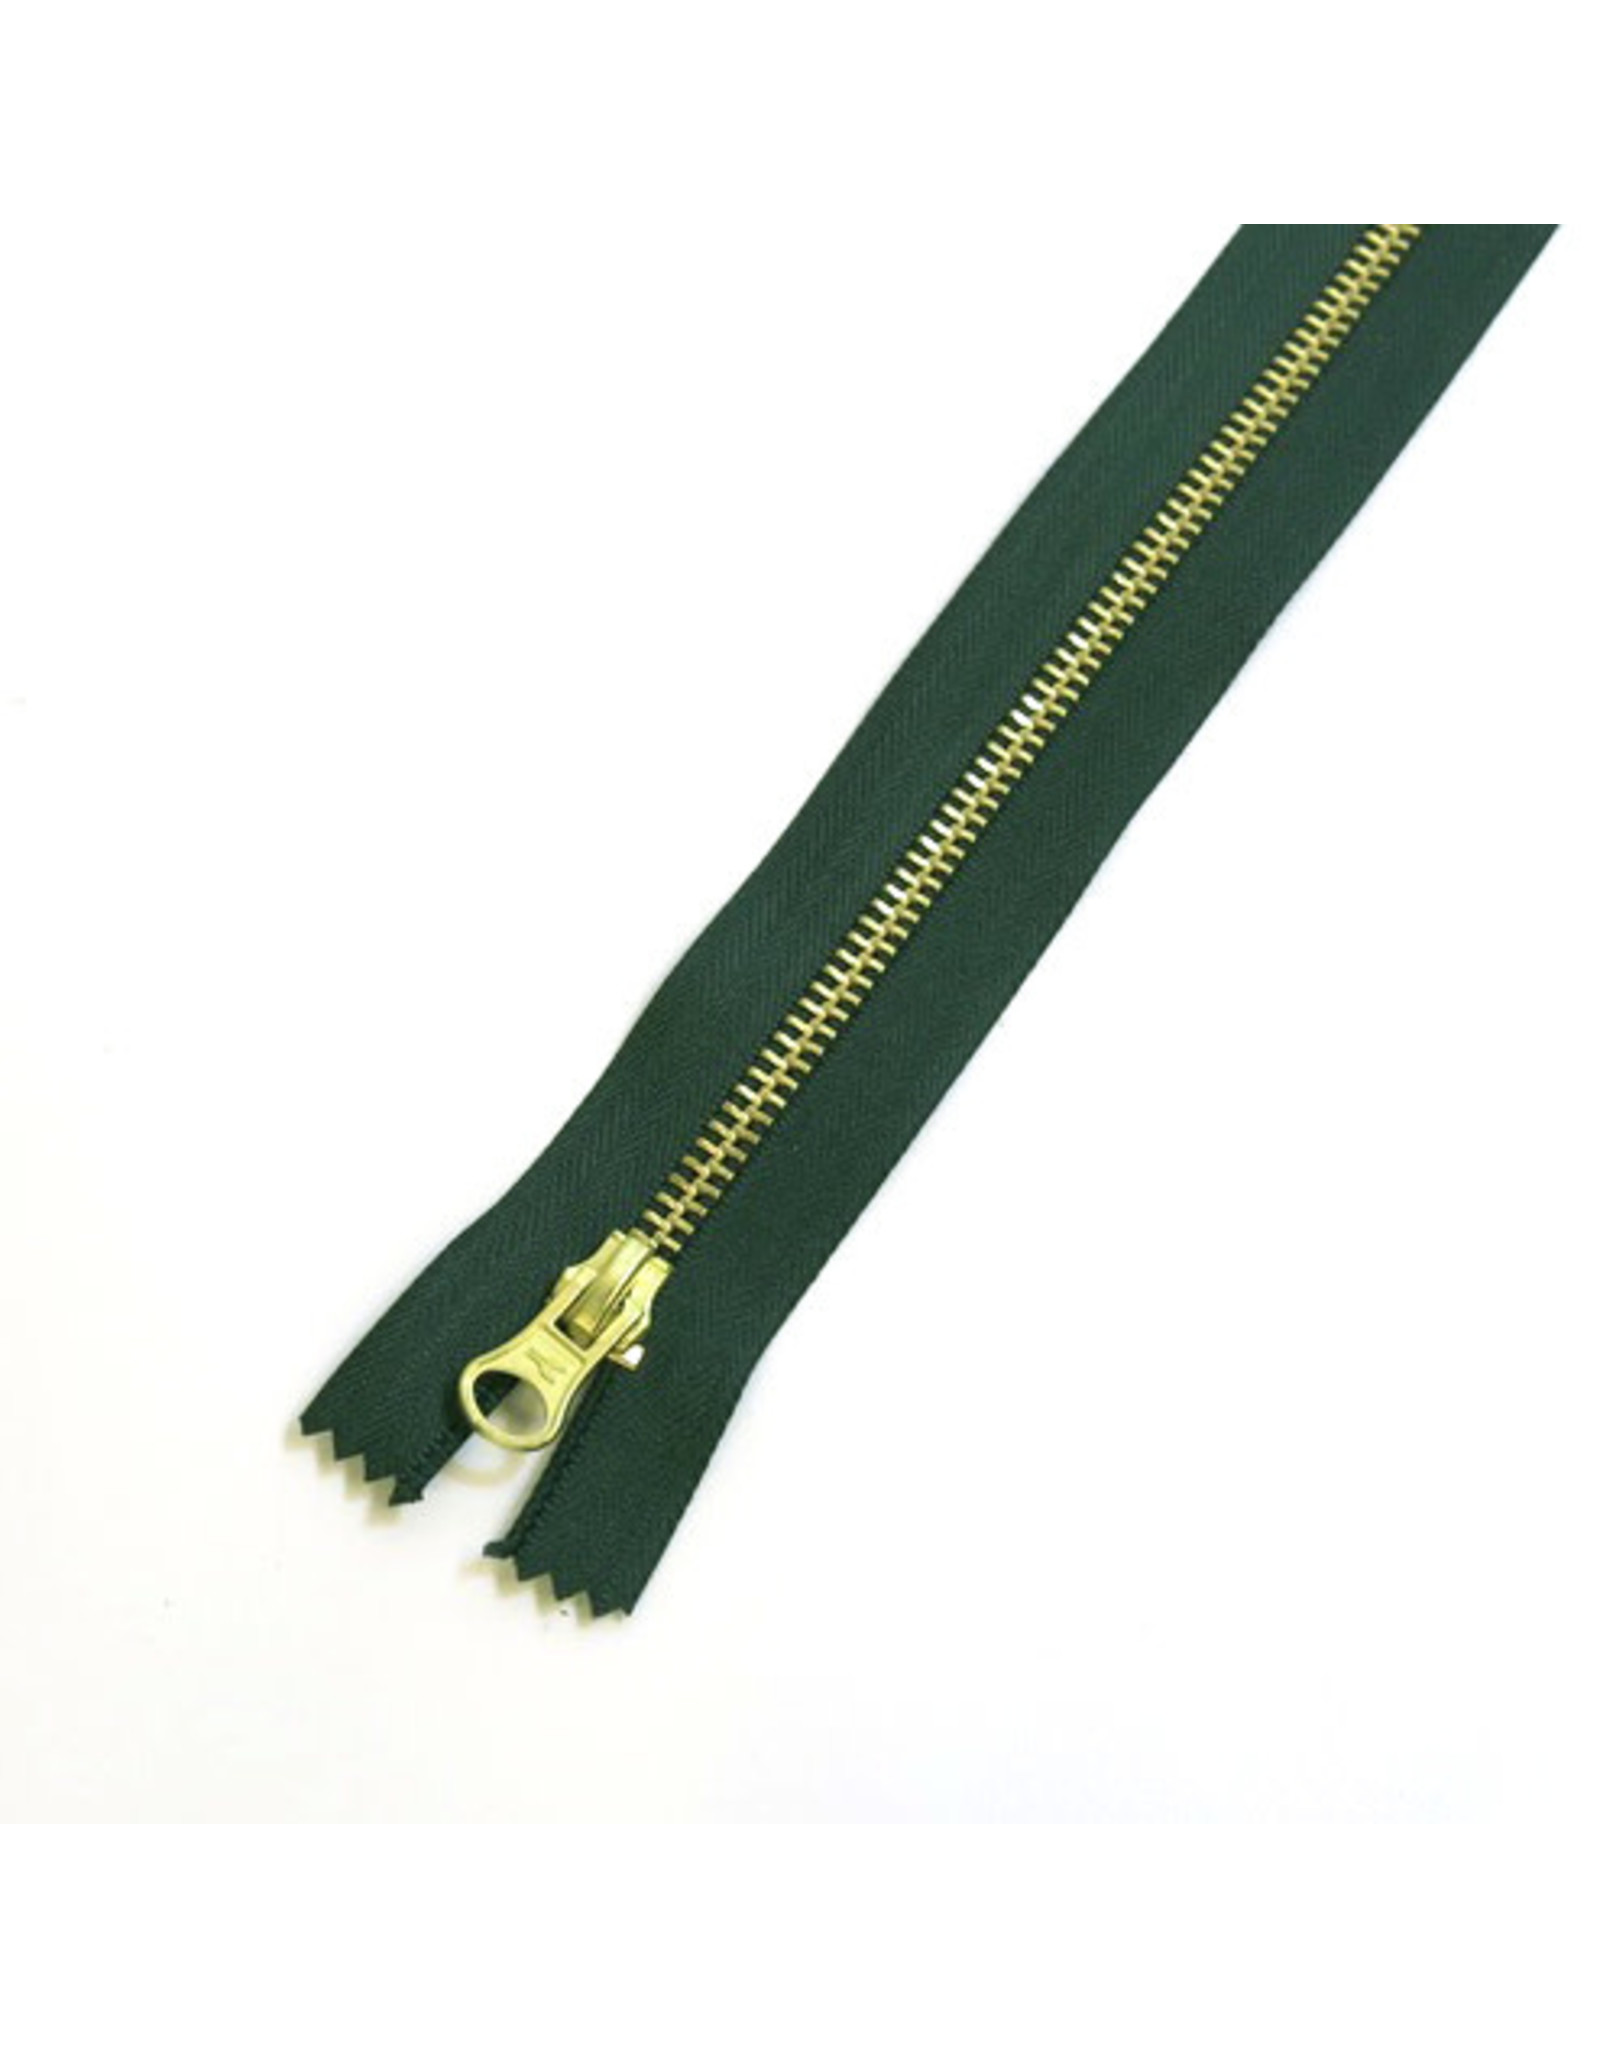 Metal zipper ALGAE GREEN